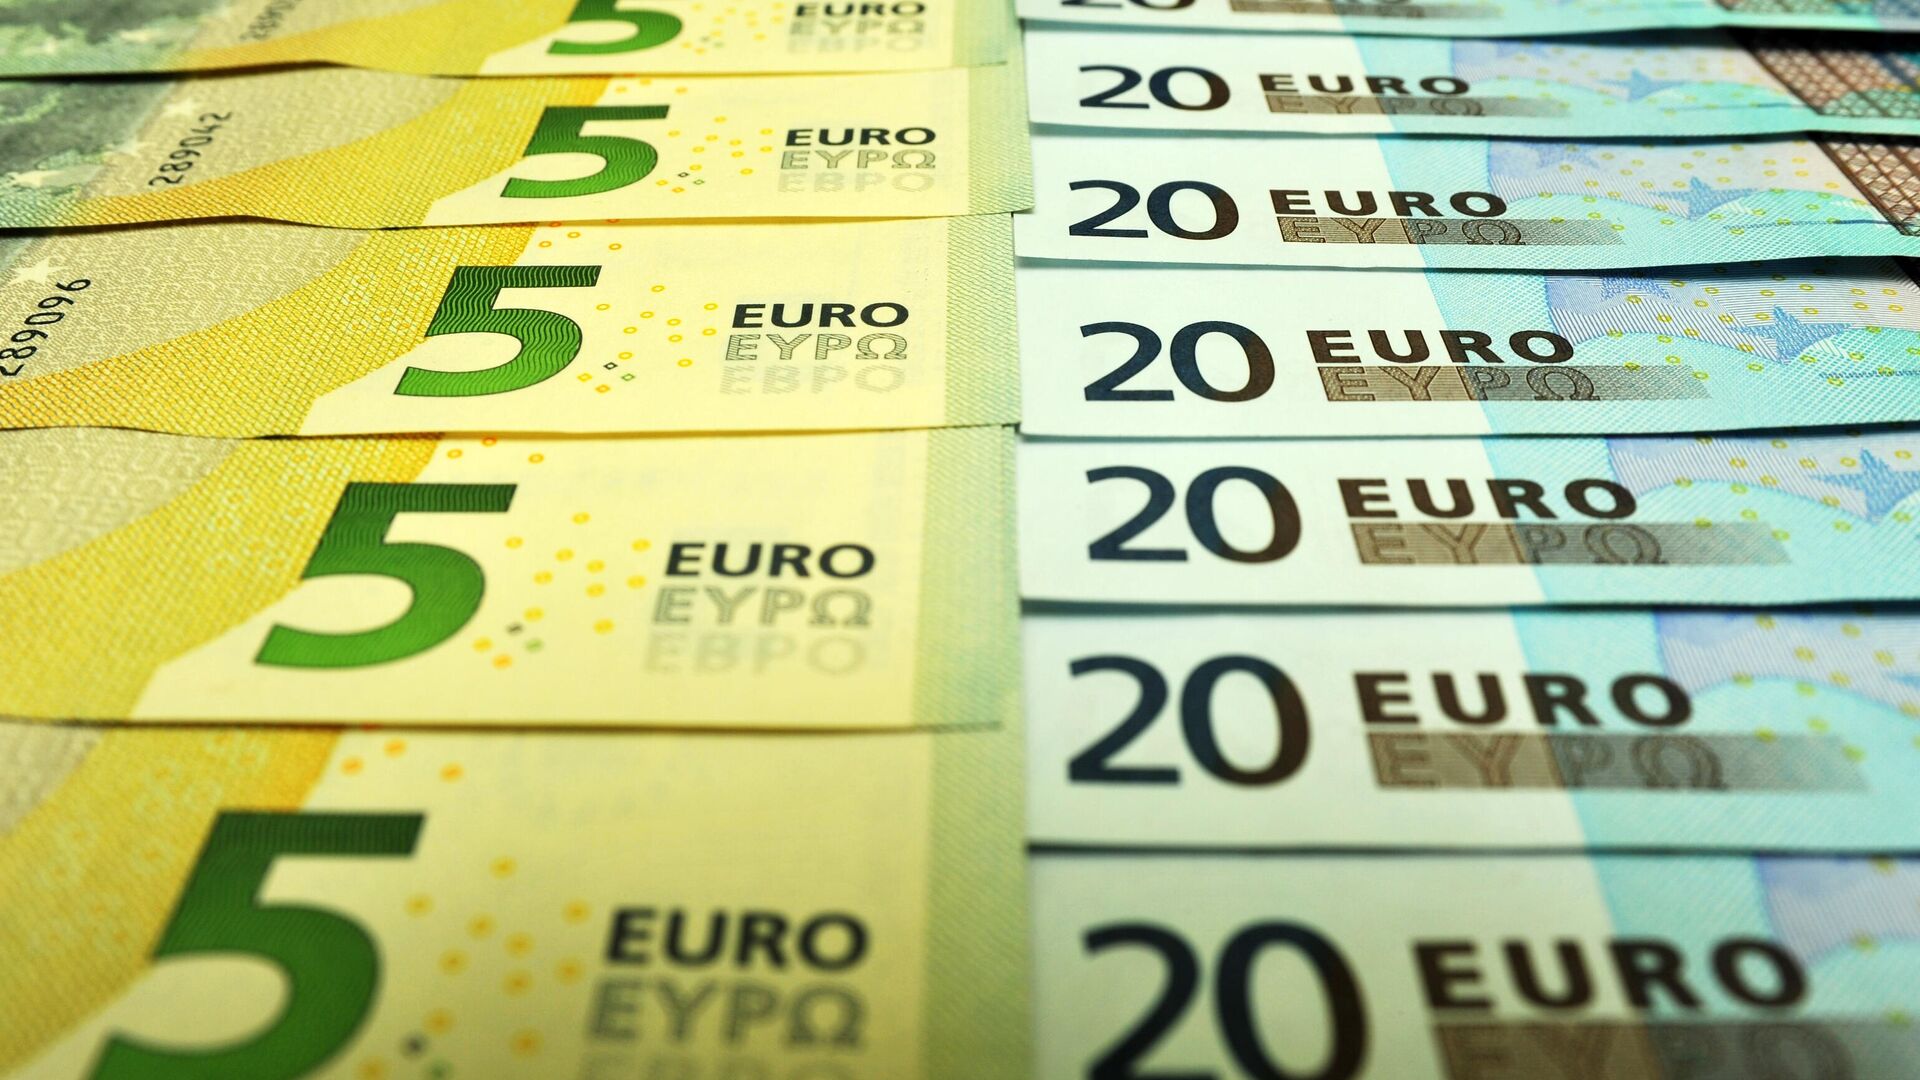 Евро обмен на сегодня спб